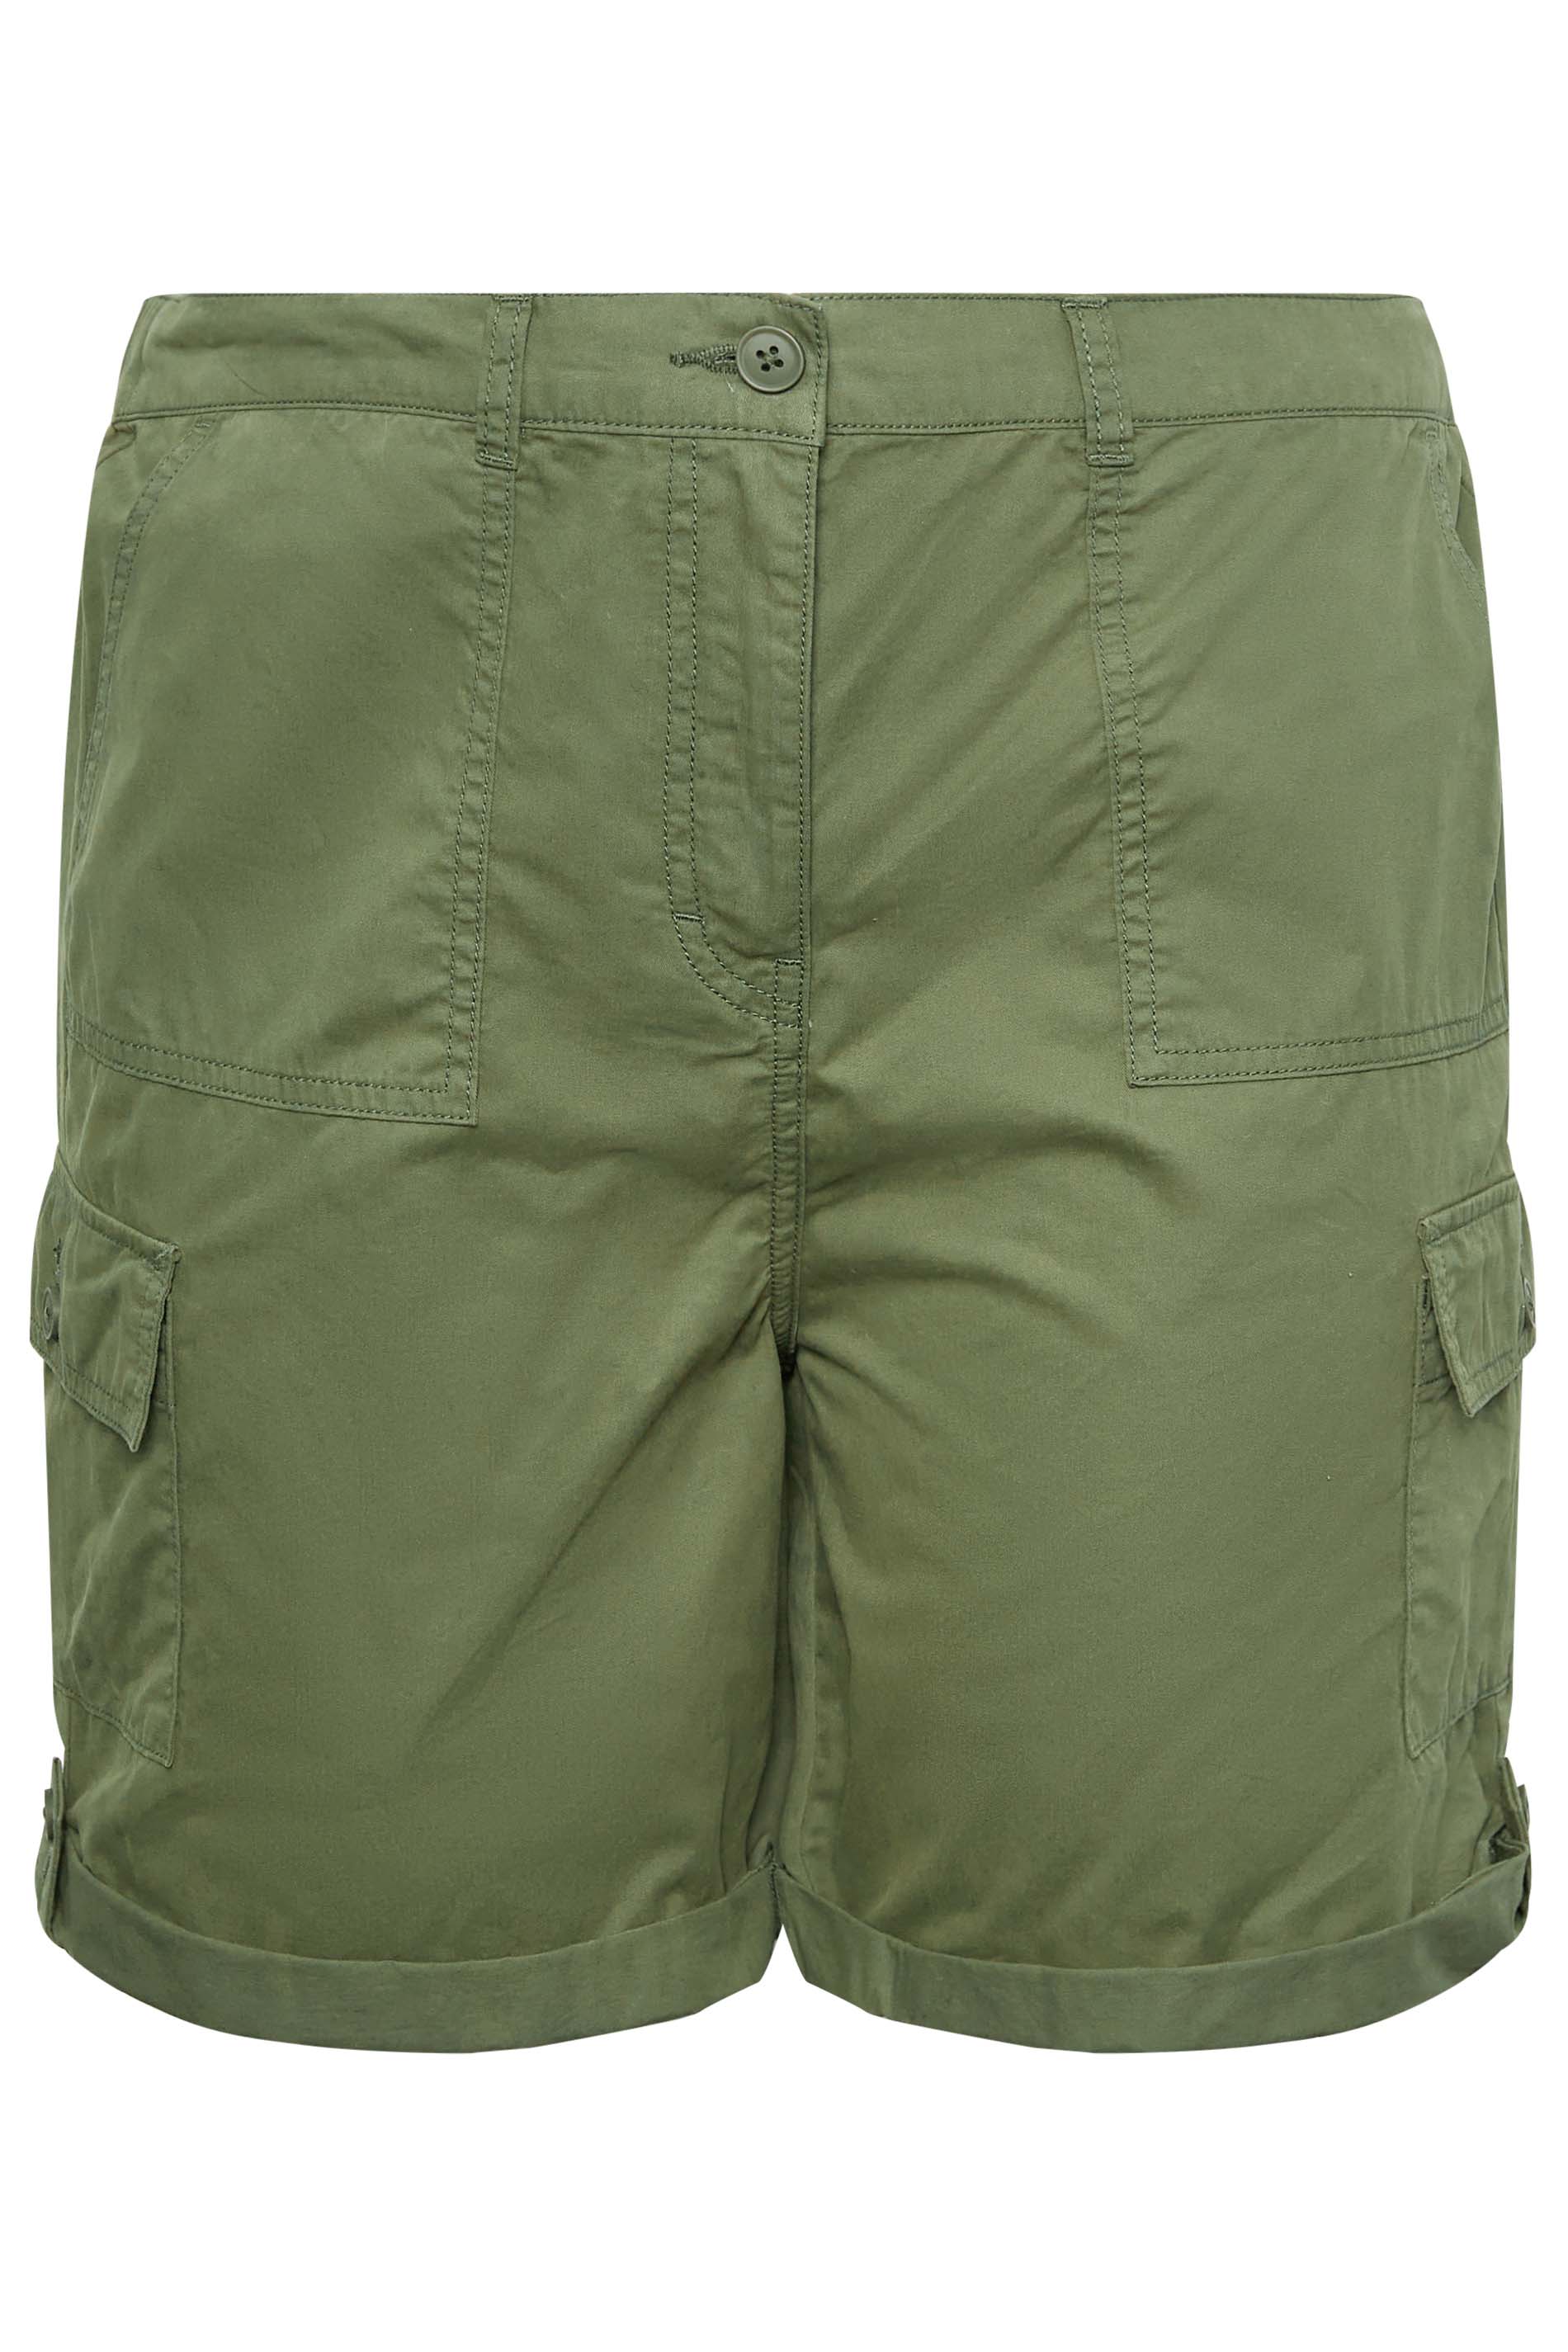 YOURS Plus Size Khaki Green Cargo Chino Shorts